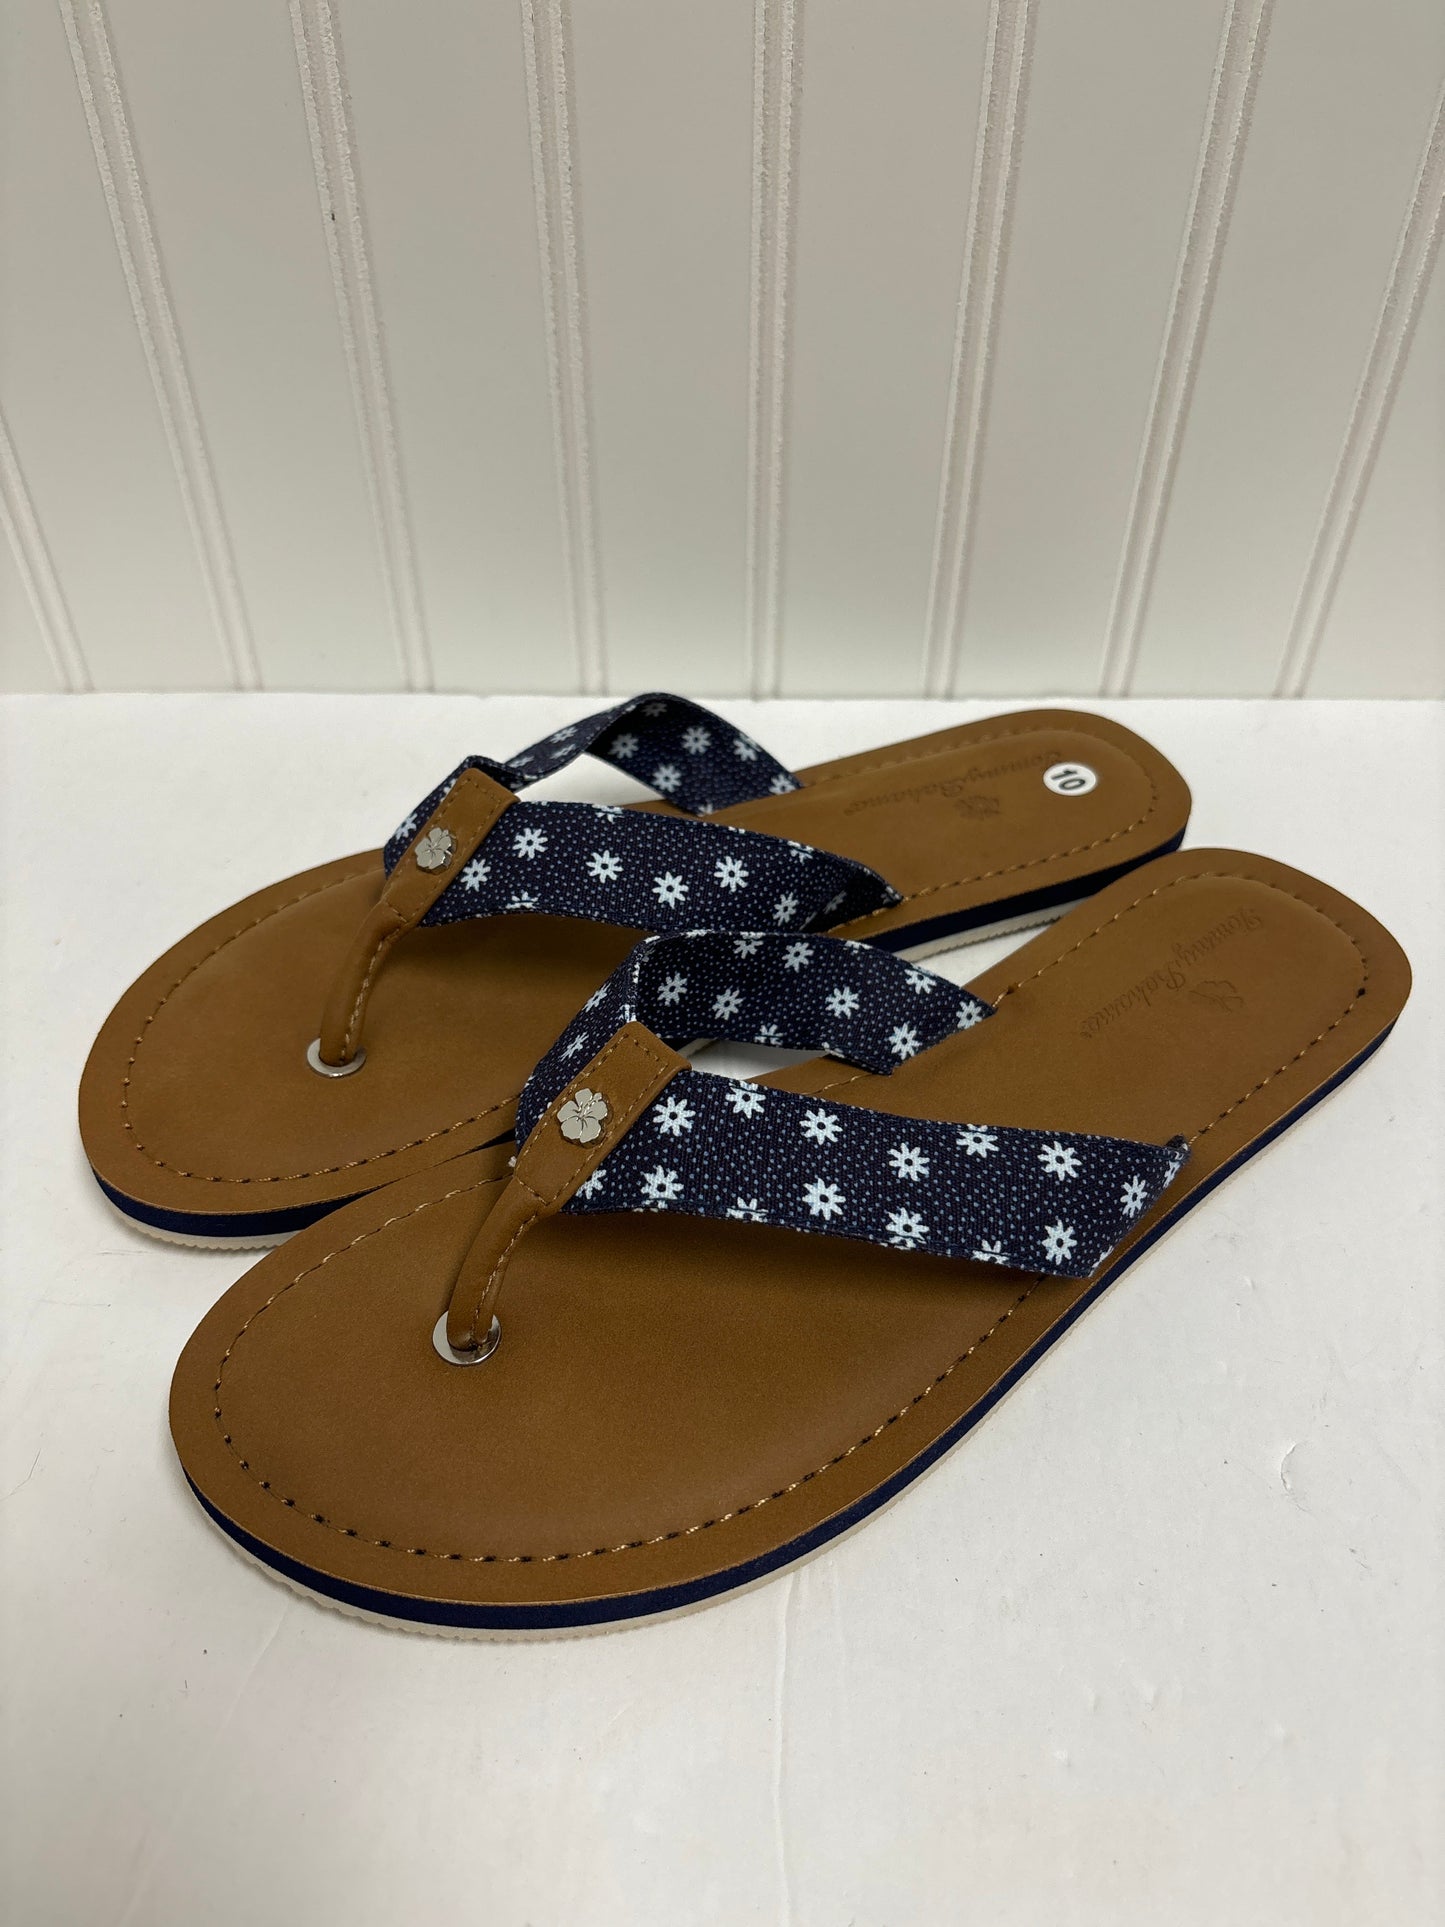 Blue Sandals Flip Flops Tommy Bahama, Size 10